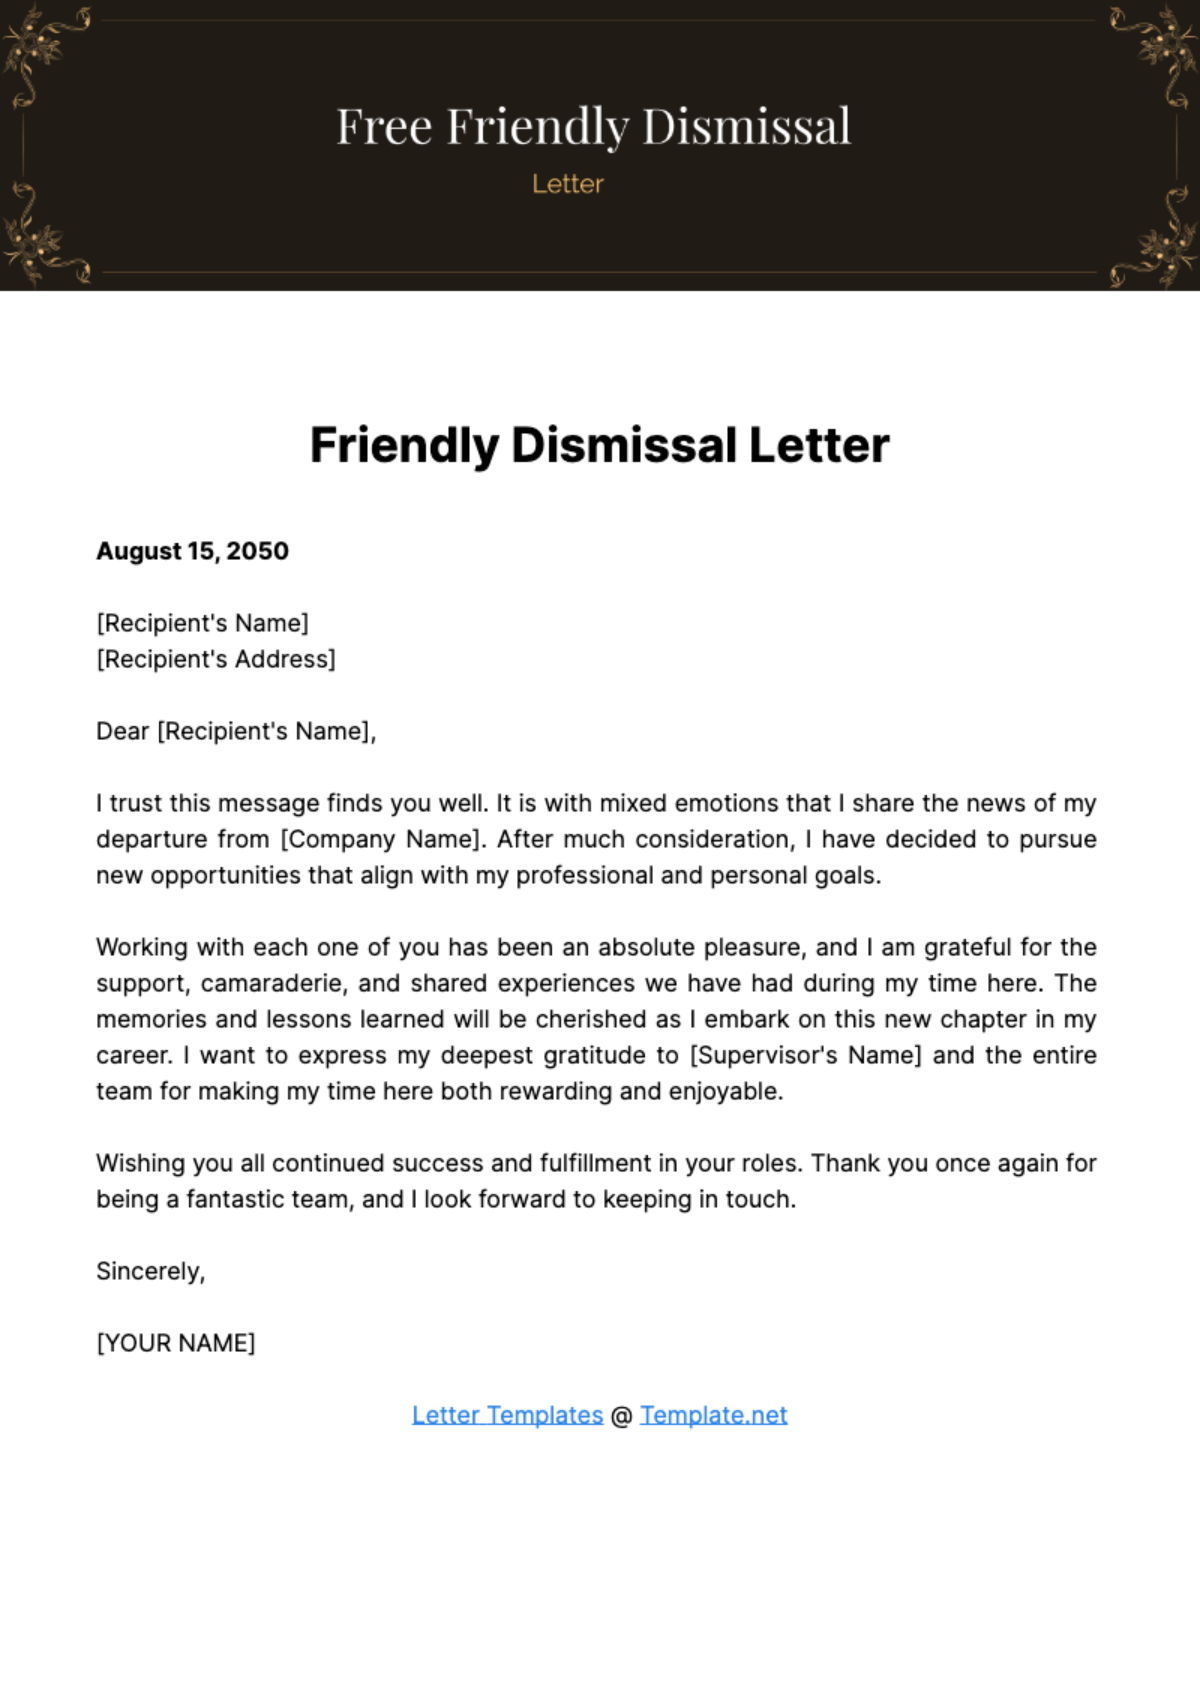 Free Friendly Dismissal Letter Template